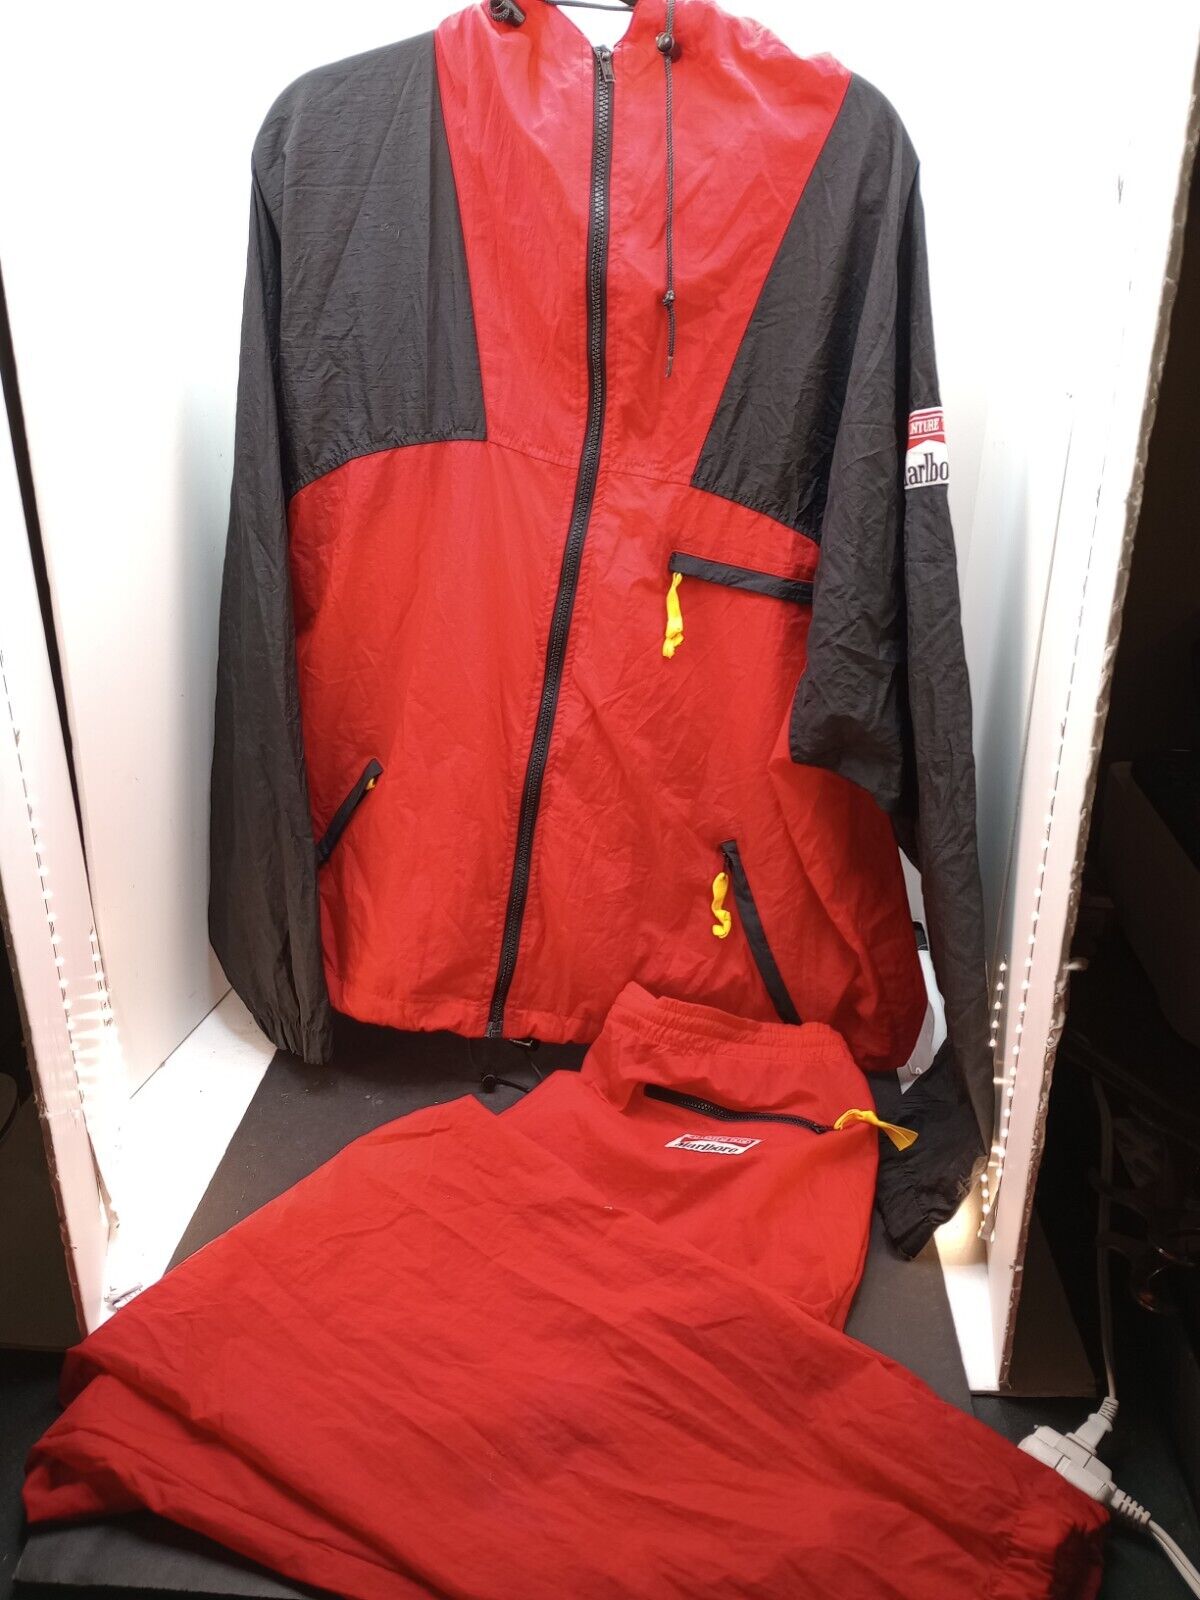 Vtg Marlboro Adventure Team Windbreaker Jacket & Pants with Carry Bag - XL Read